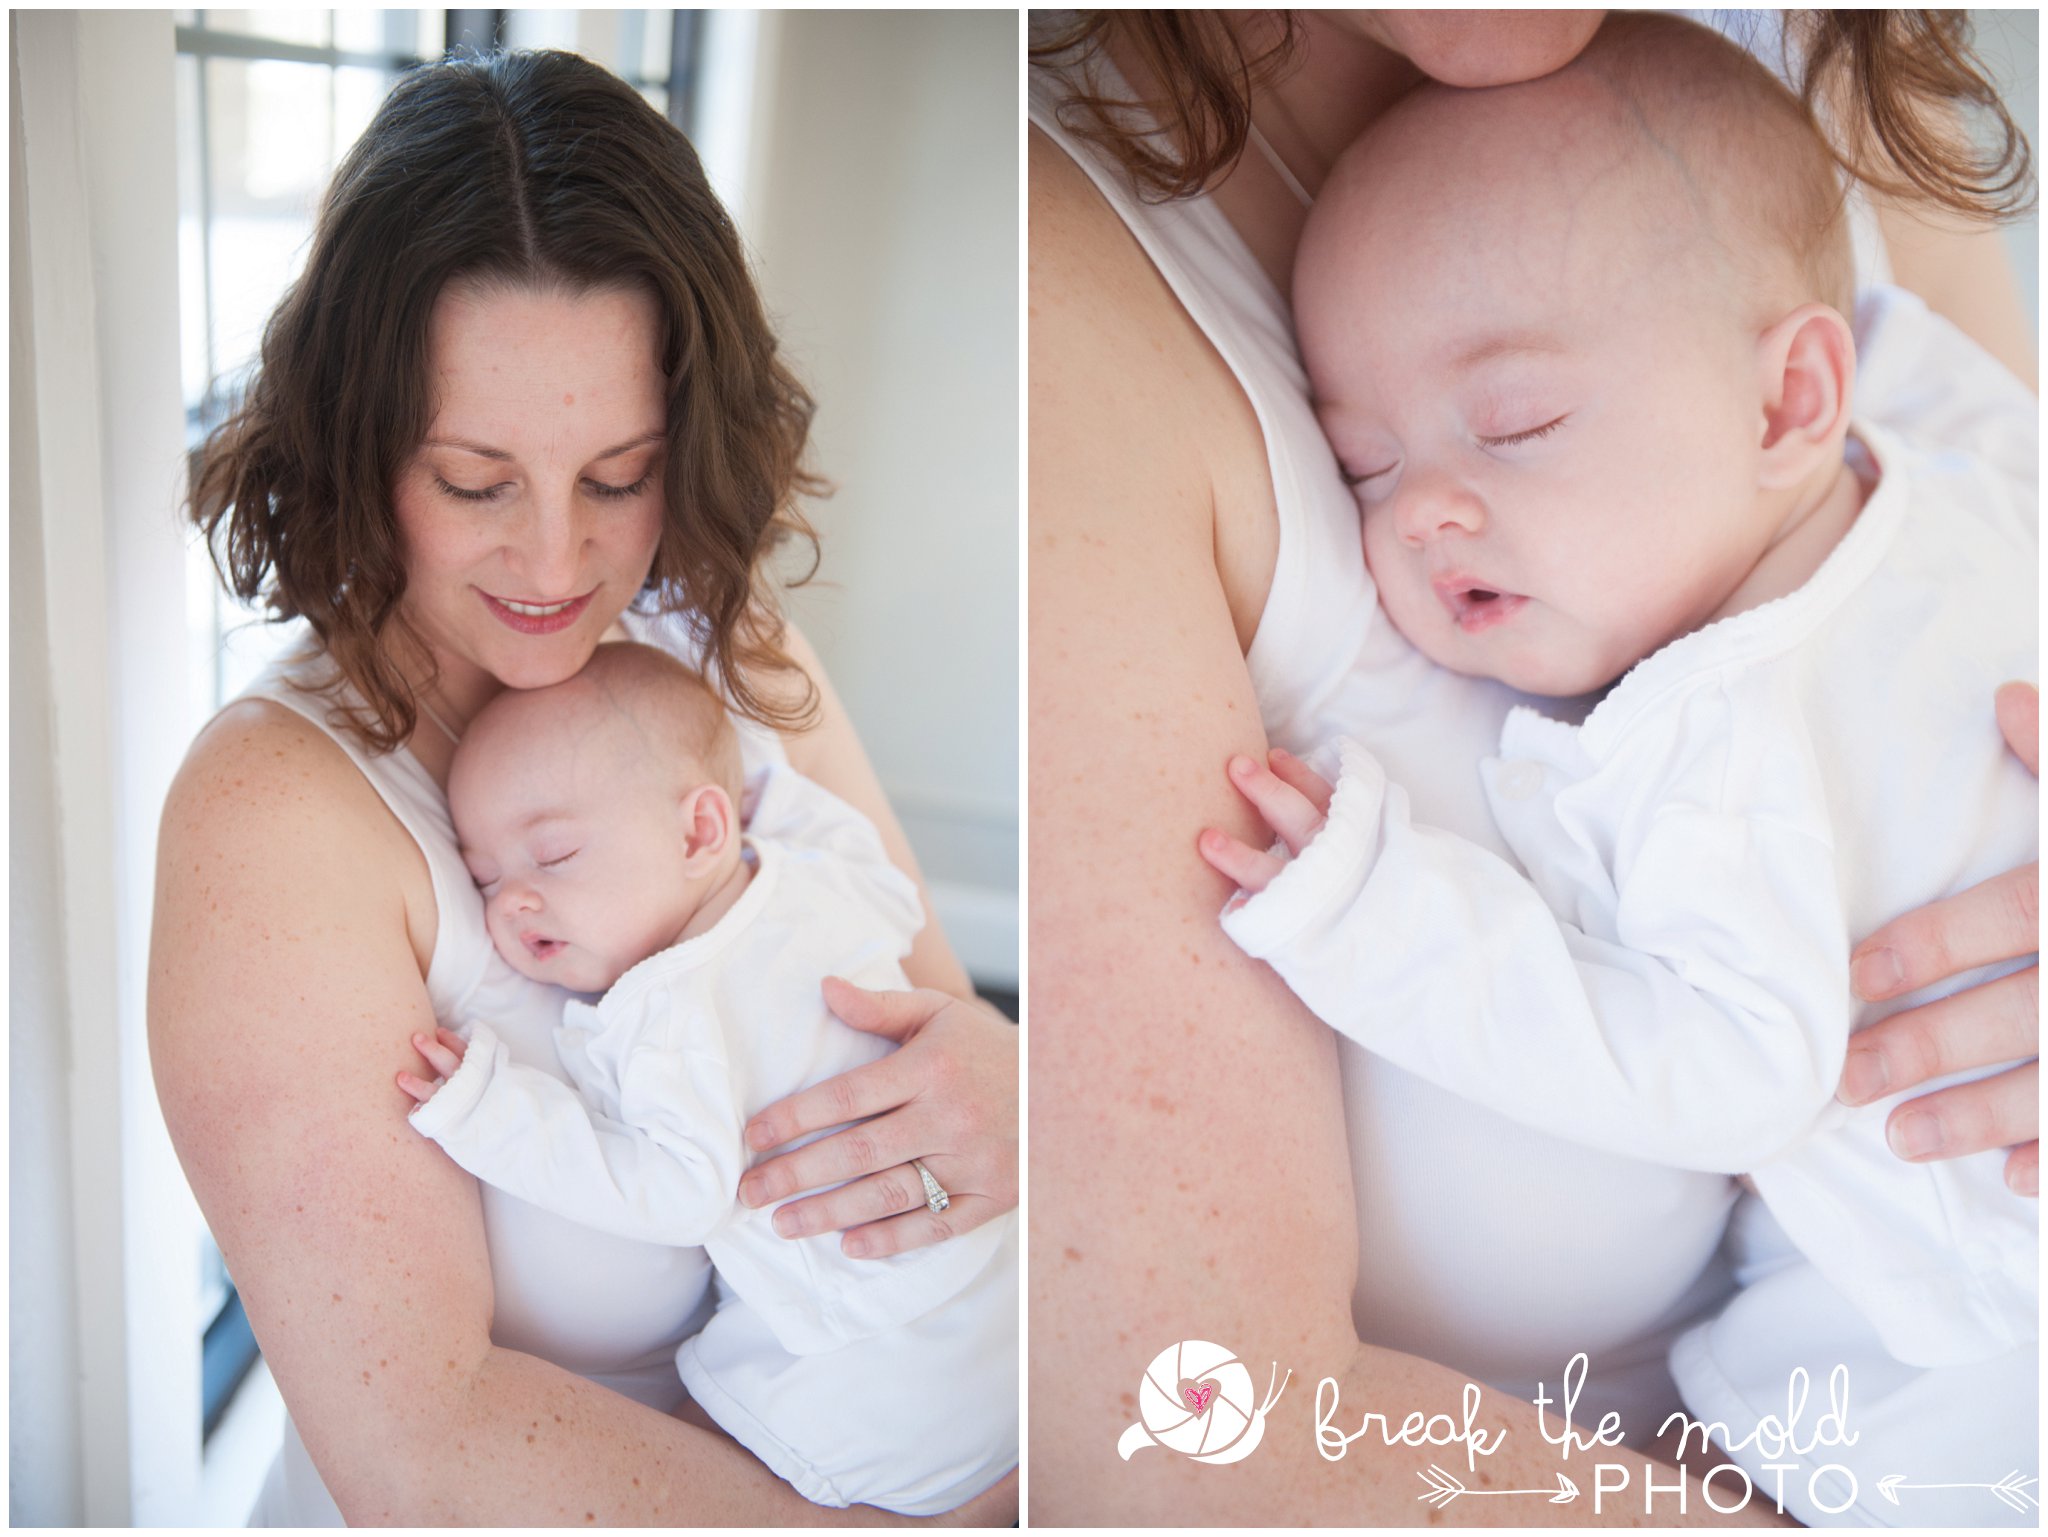 break-the-mold-photo-nursing-body-love-baby-pregnant-women-powerful-breastfeeding-sessions_7256.jpg